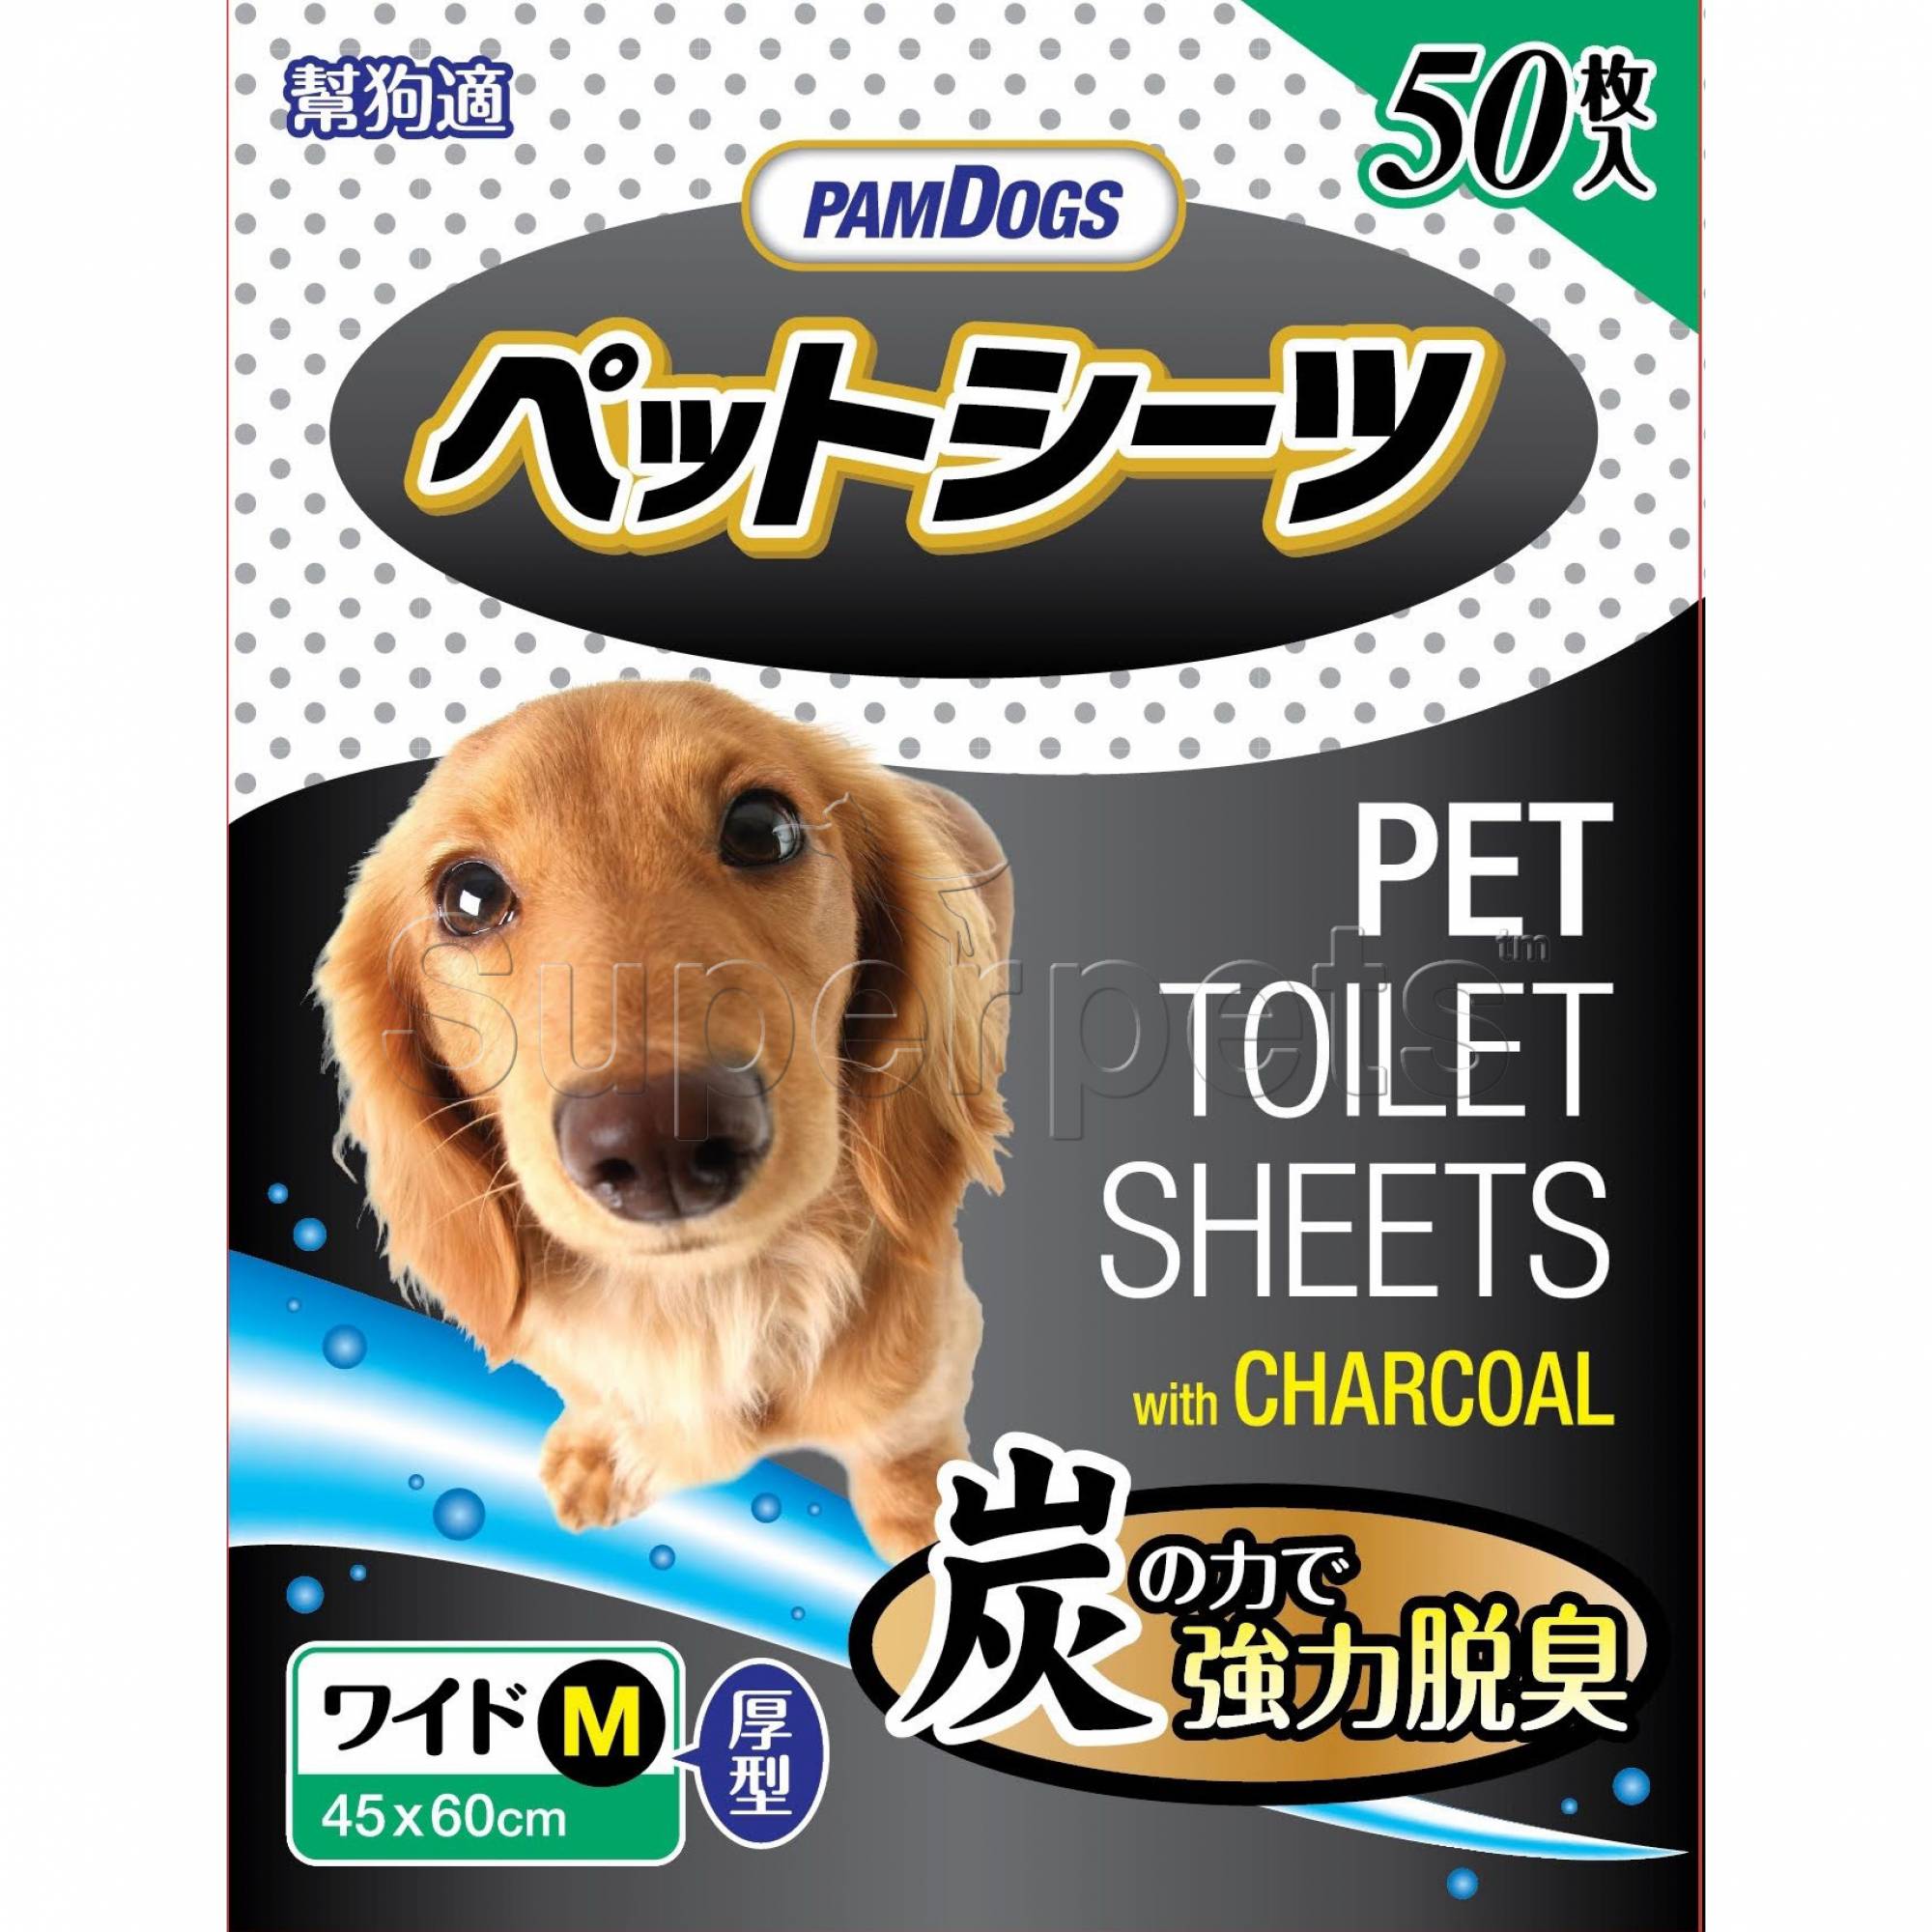 PamDogs 009 Charcoal Pet Sheets (Medium) 45x60cm x50pcs